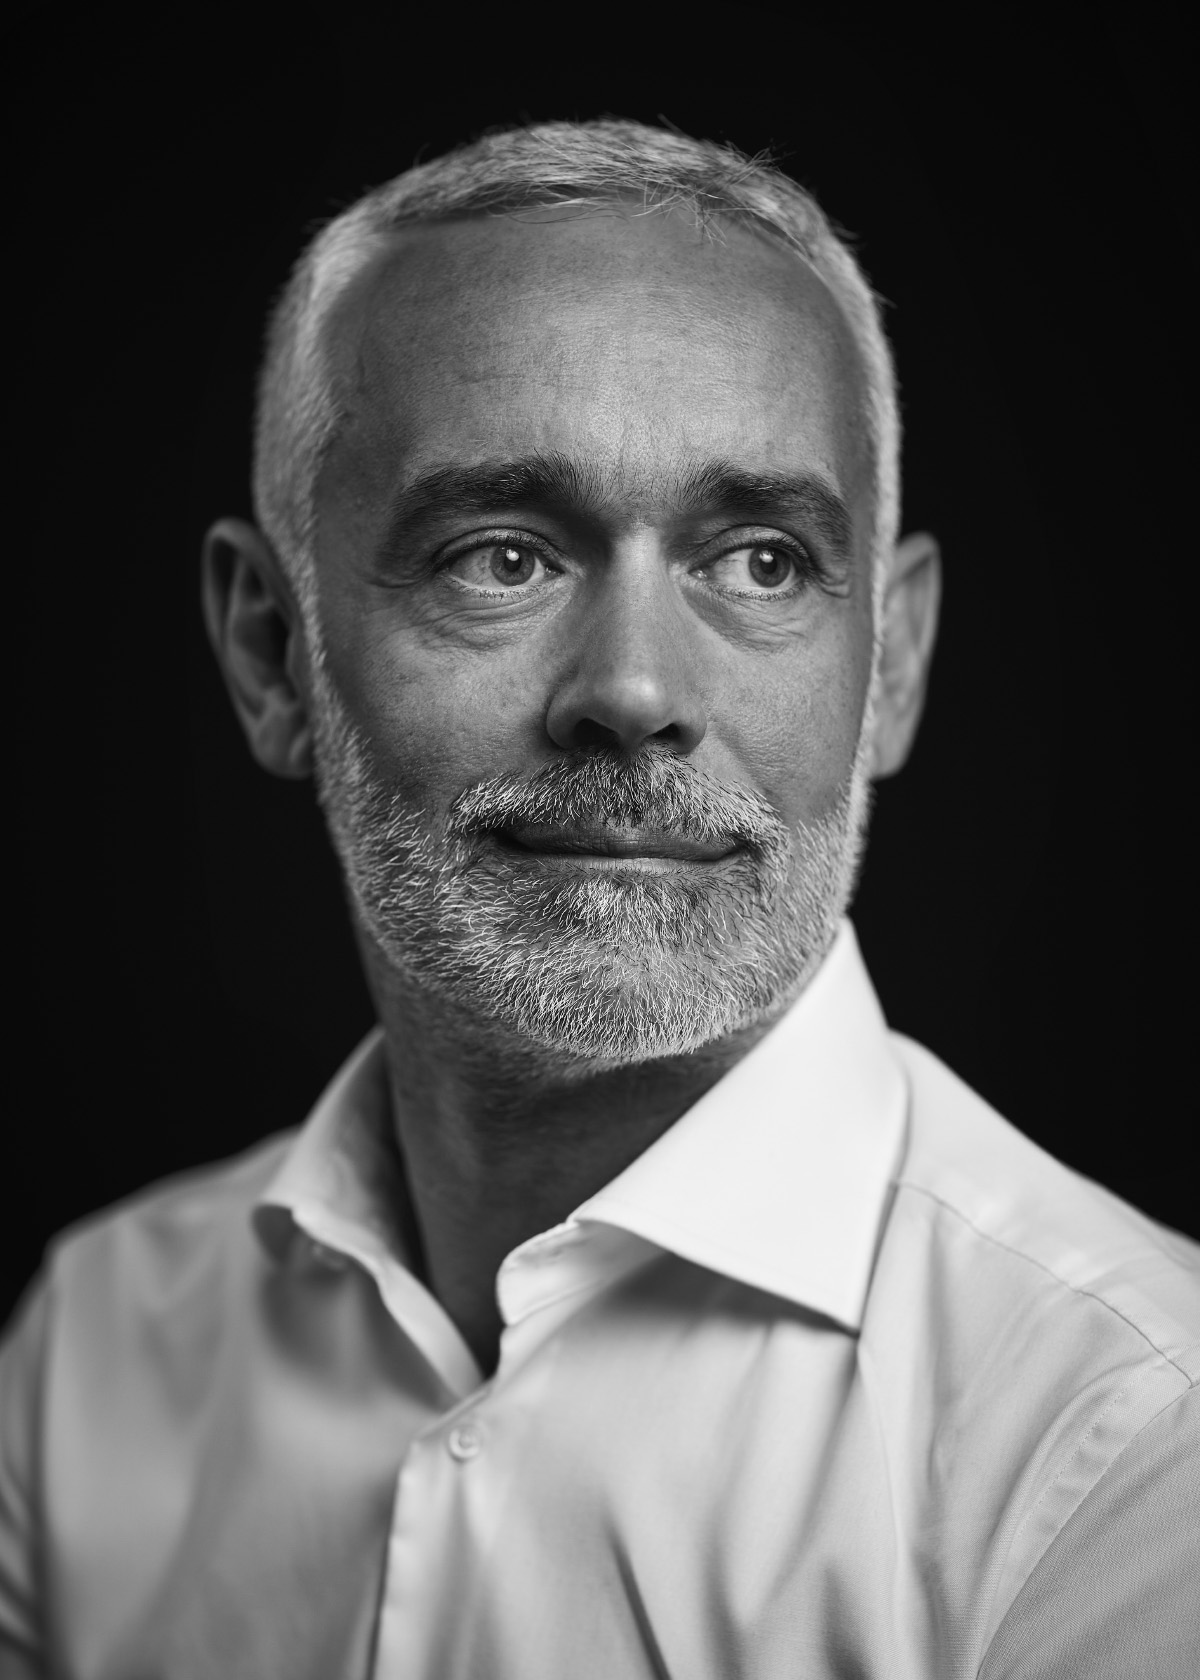 Massimo Lusardi, Schweiz-Chef Bain & Company
Portrait